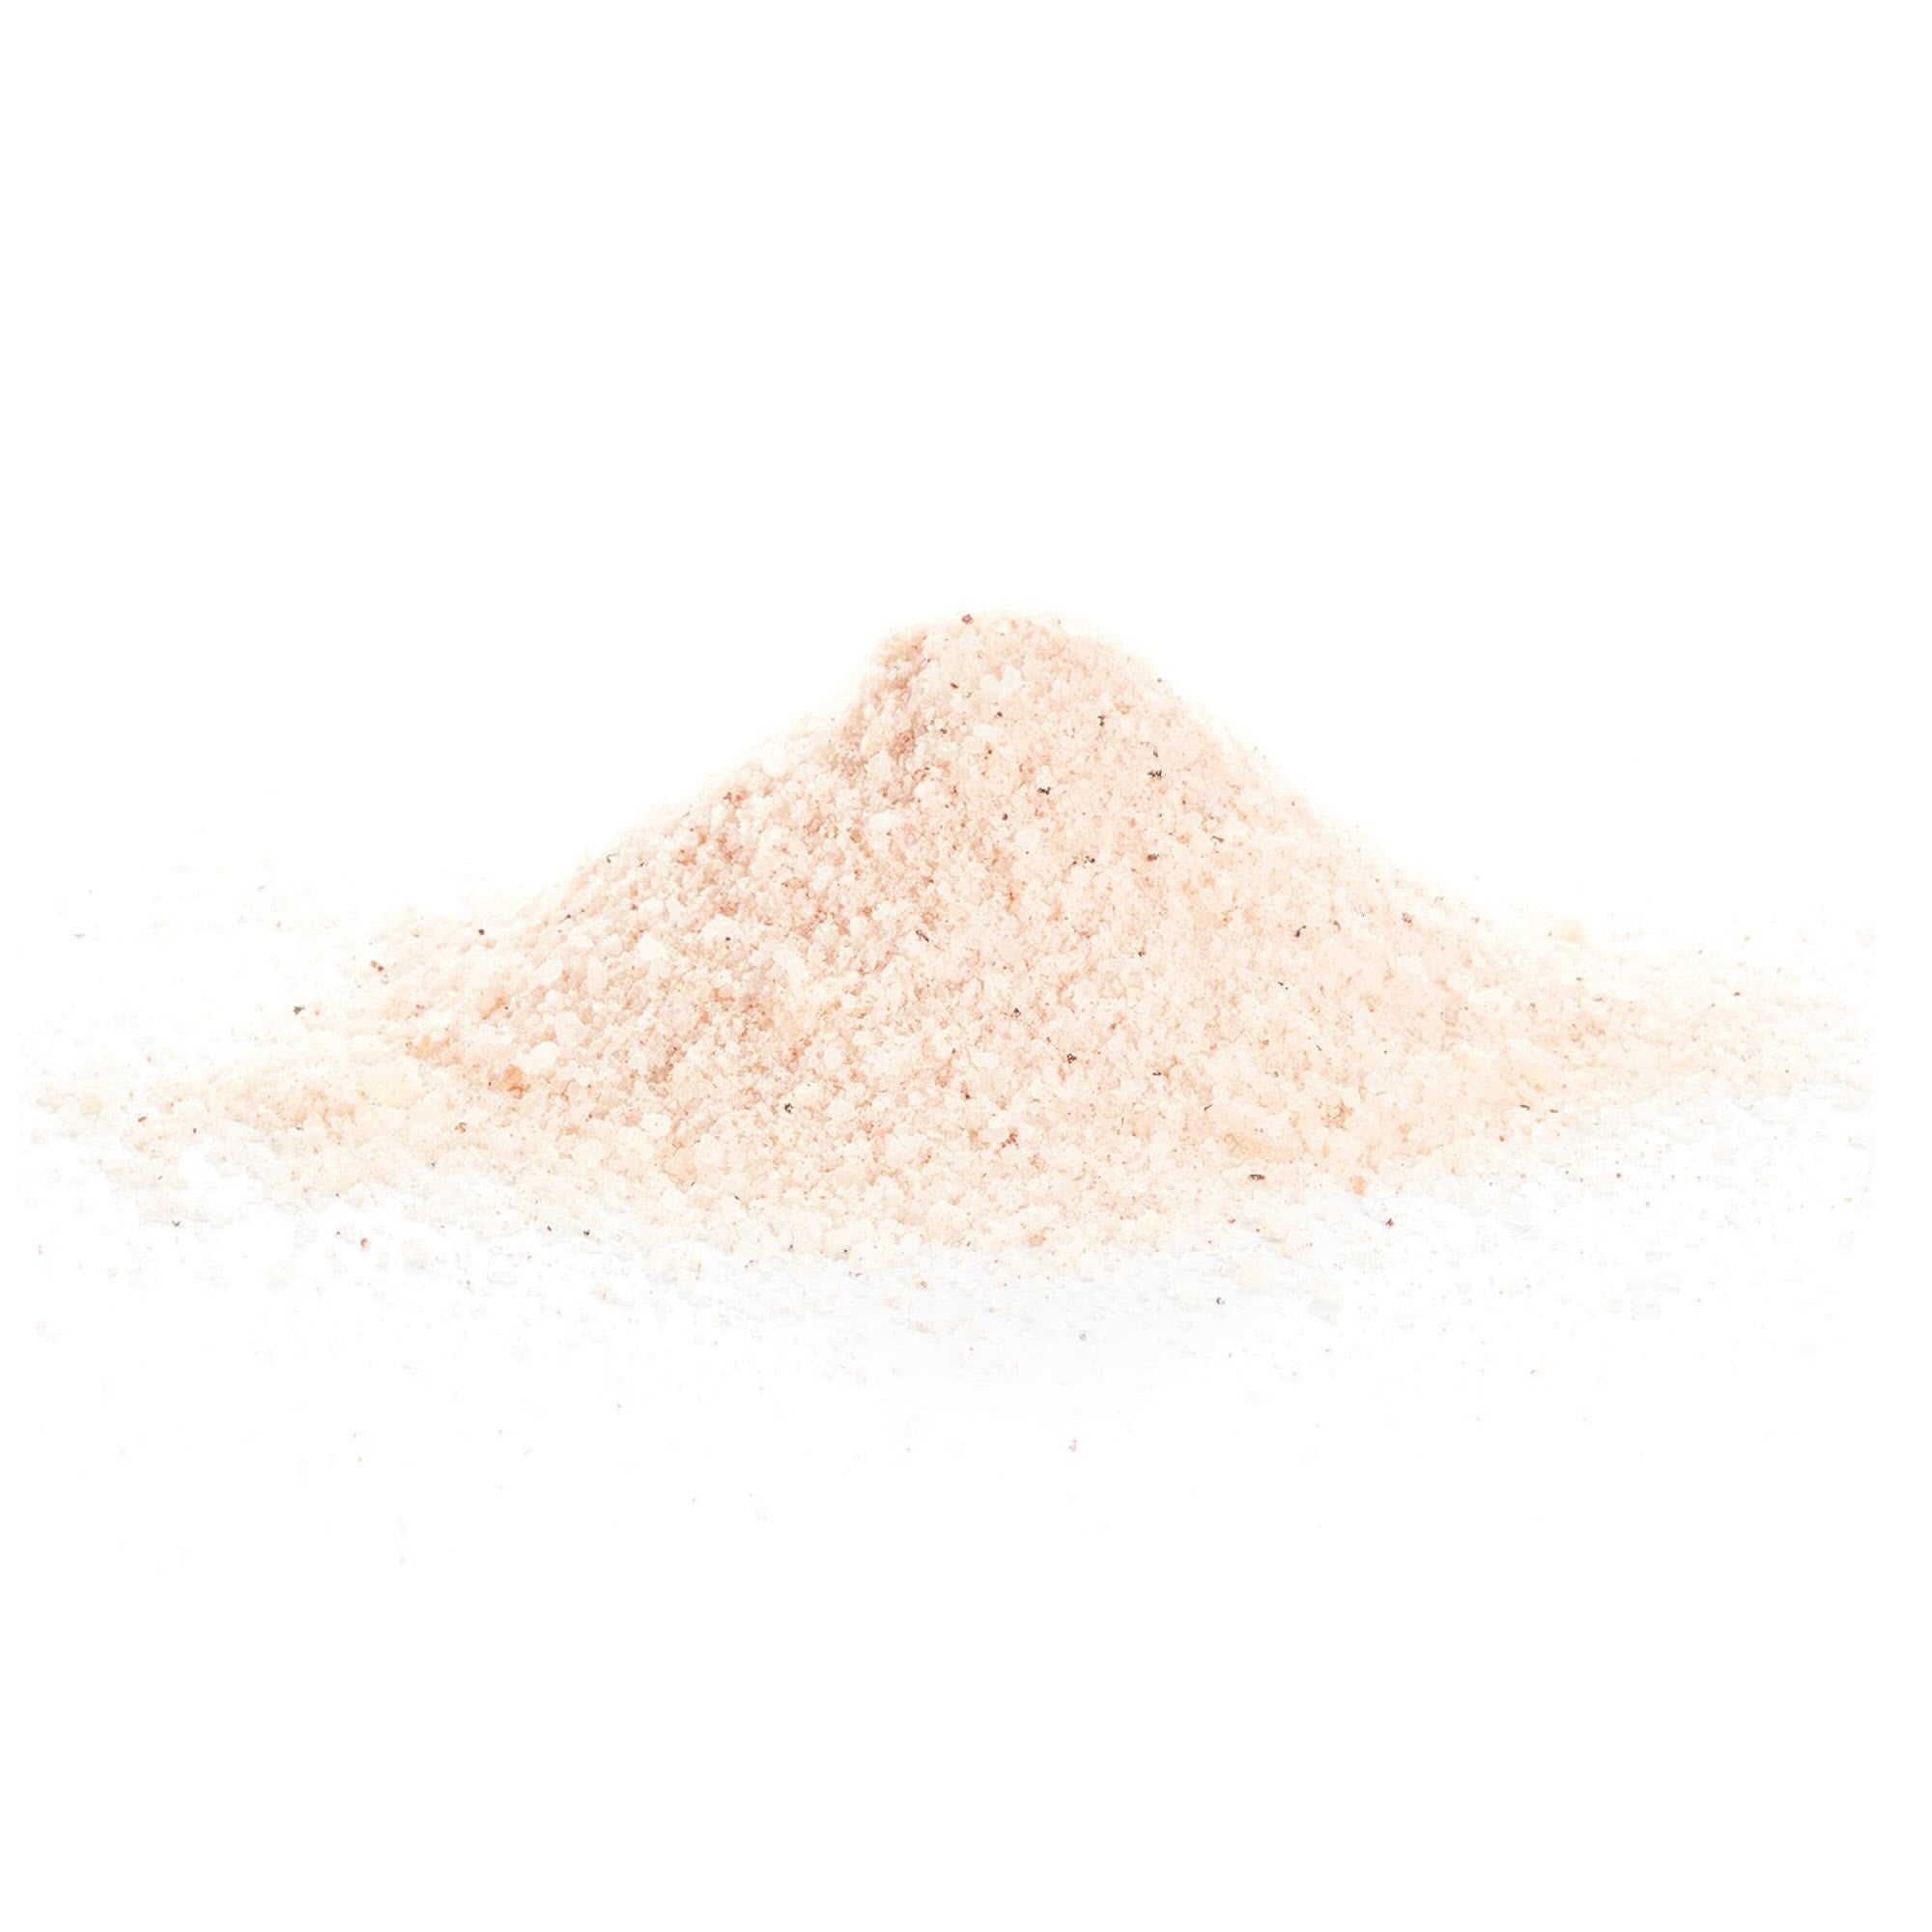 Image of the clarifying sea salt soak on a white background.